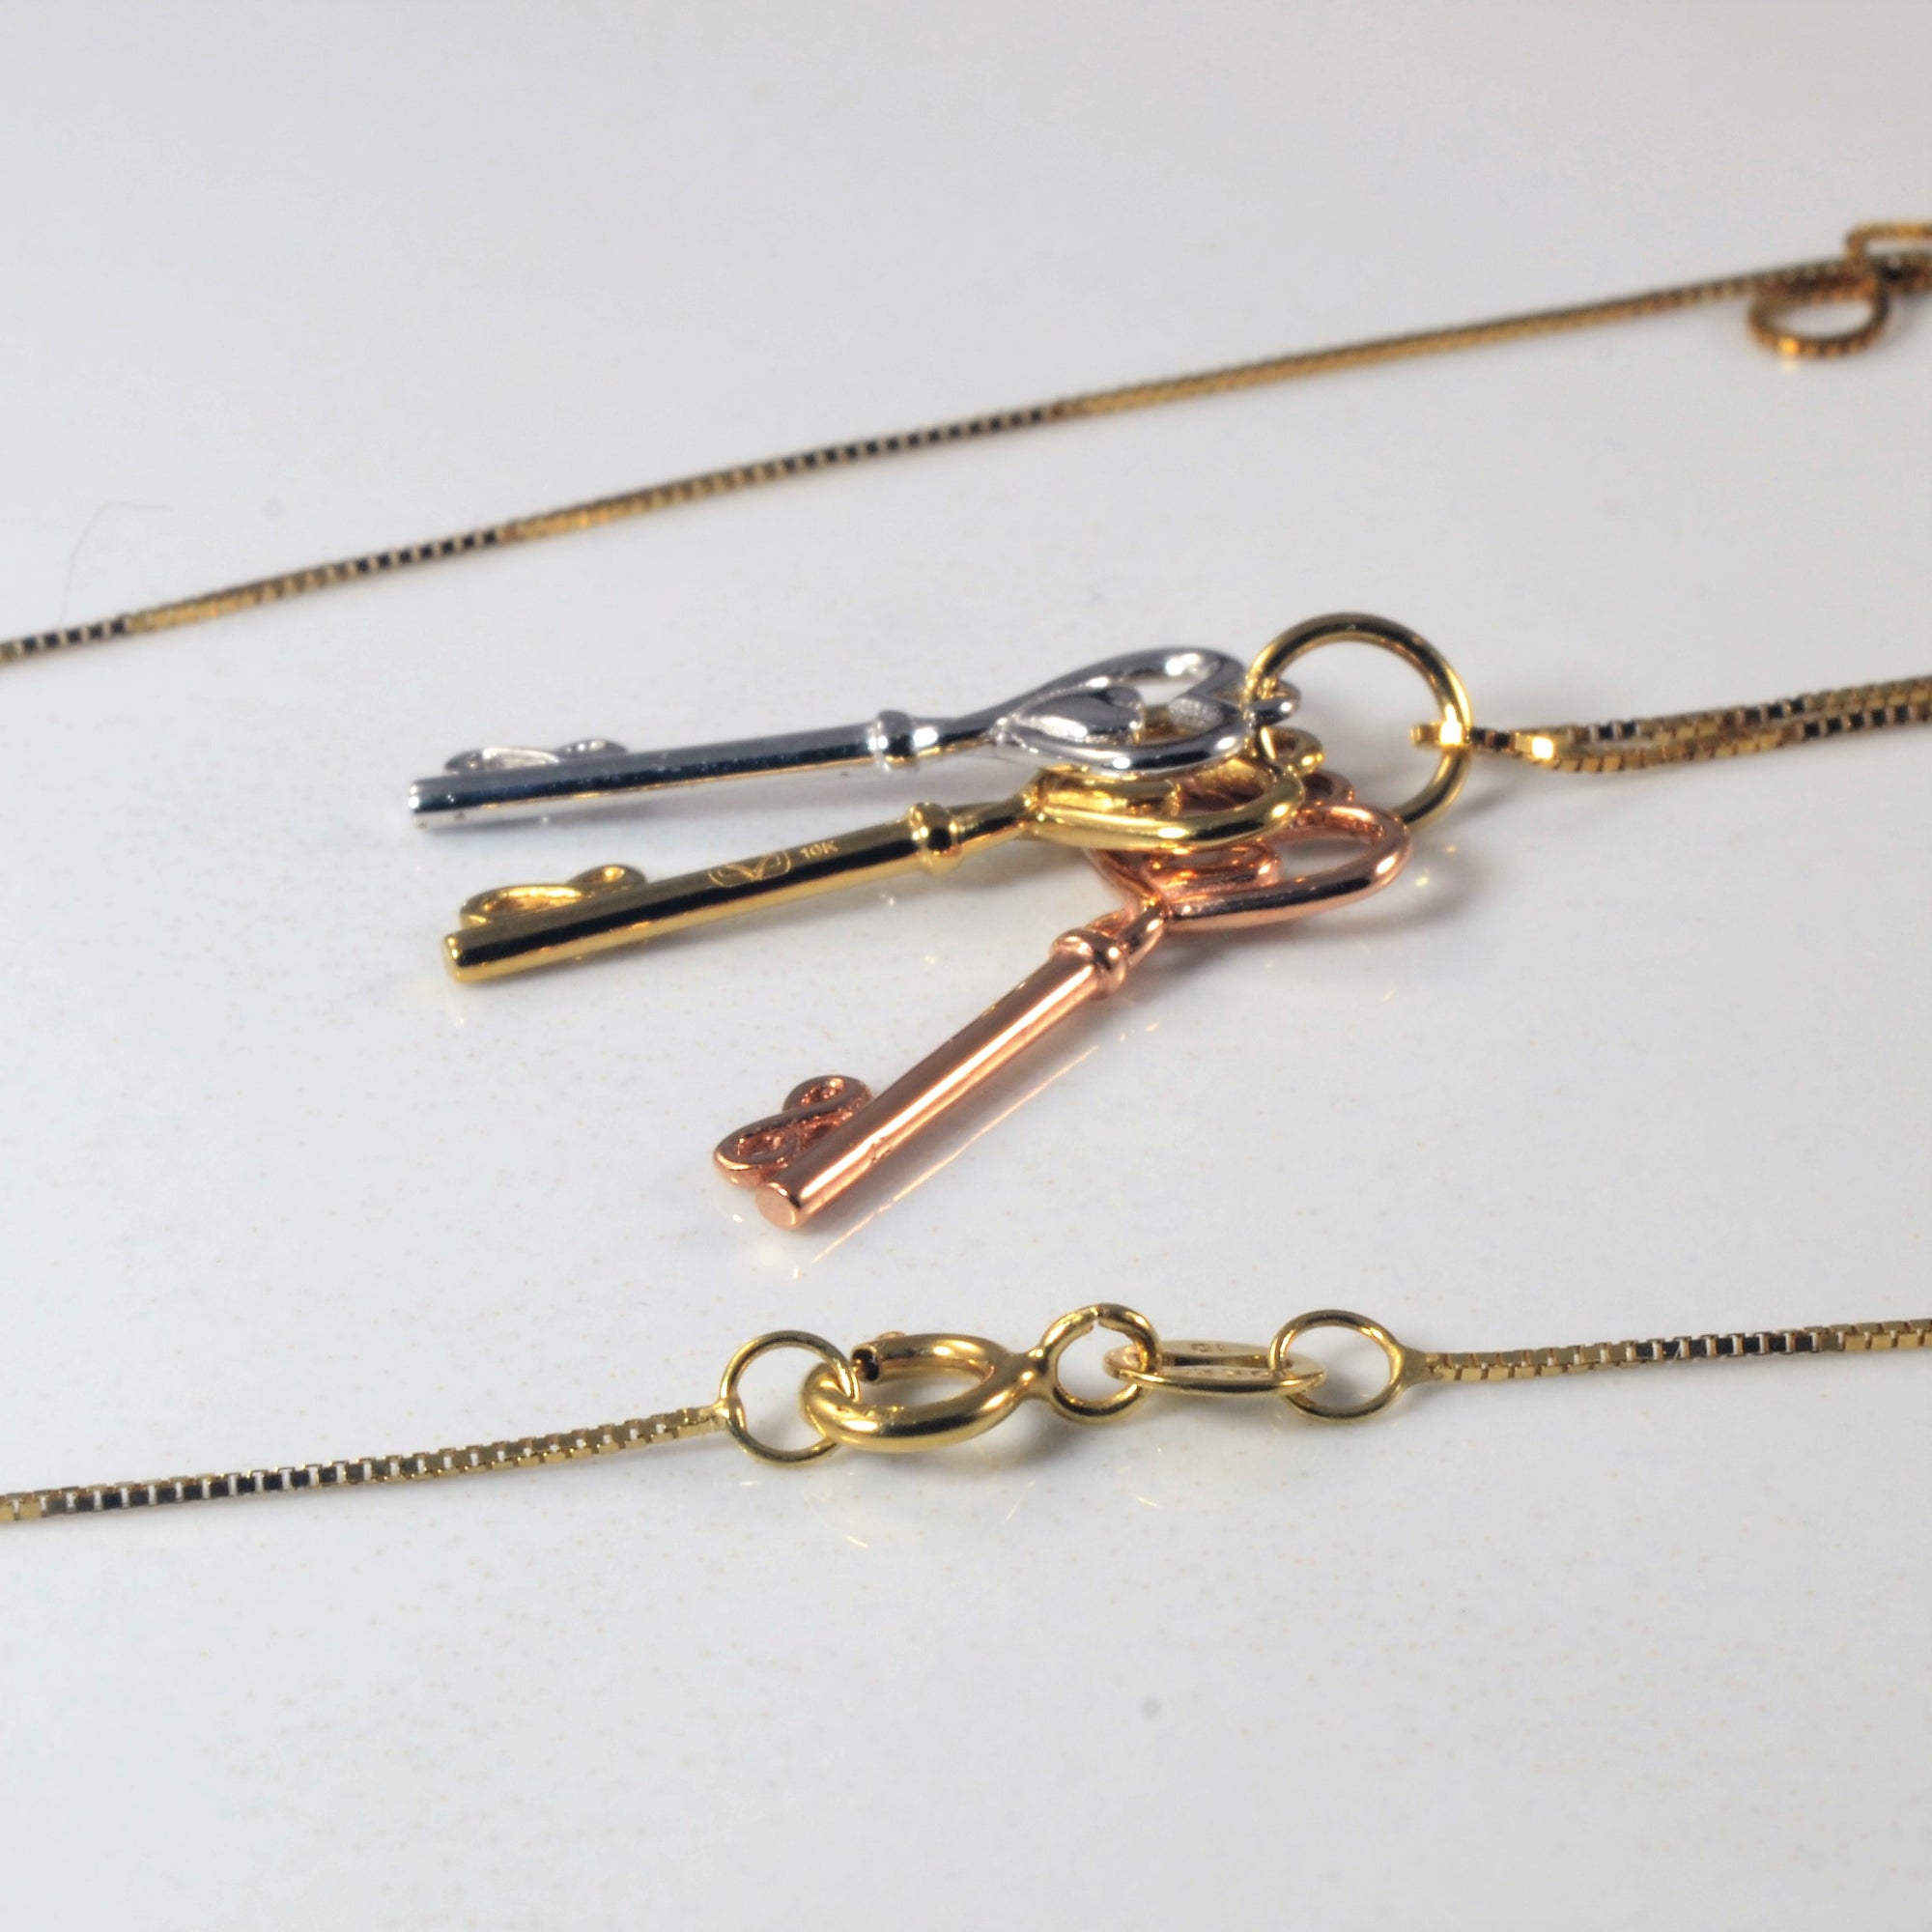 Three Gold Keys Necklace | 18